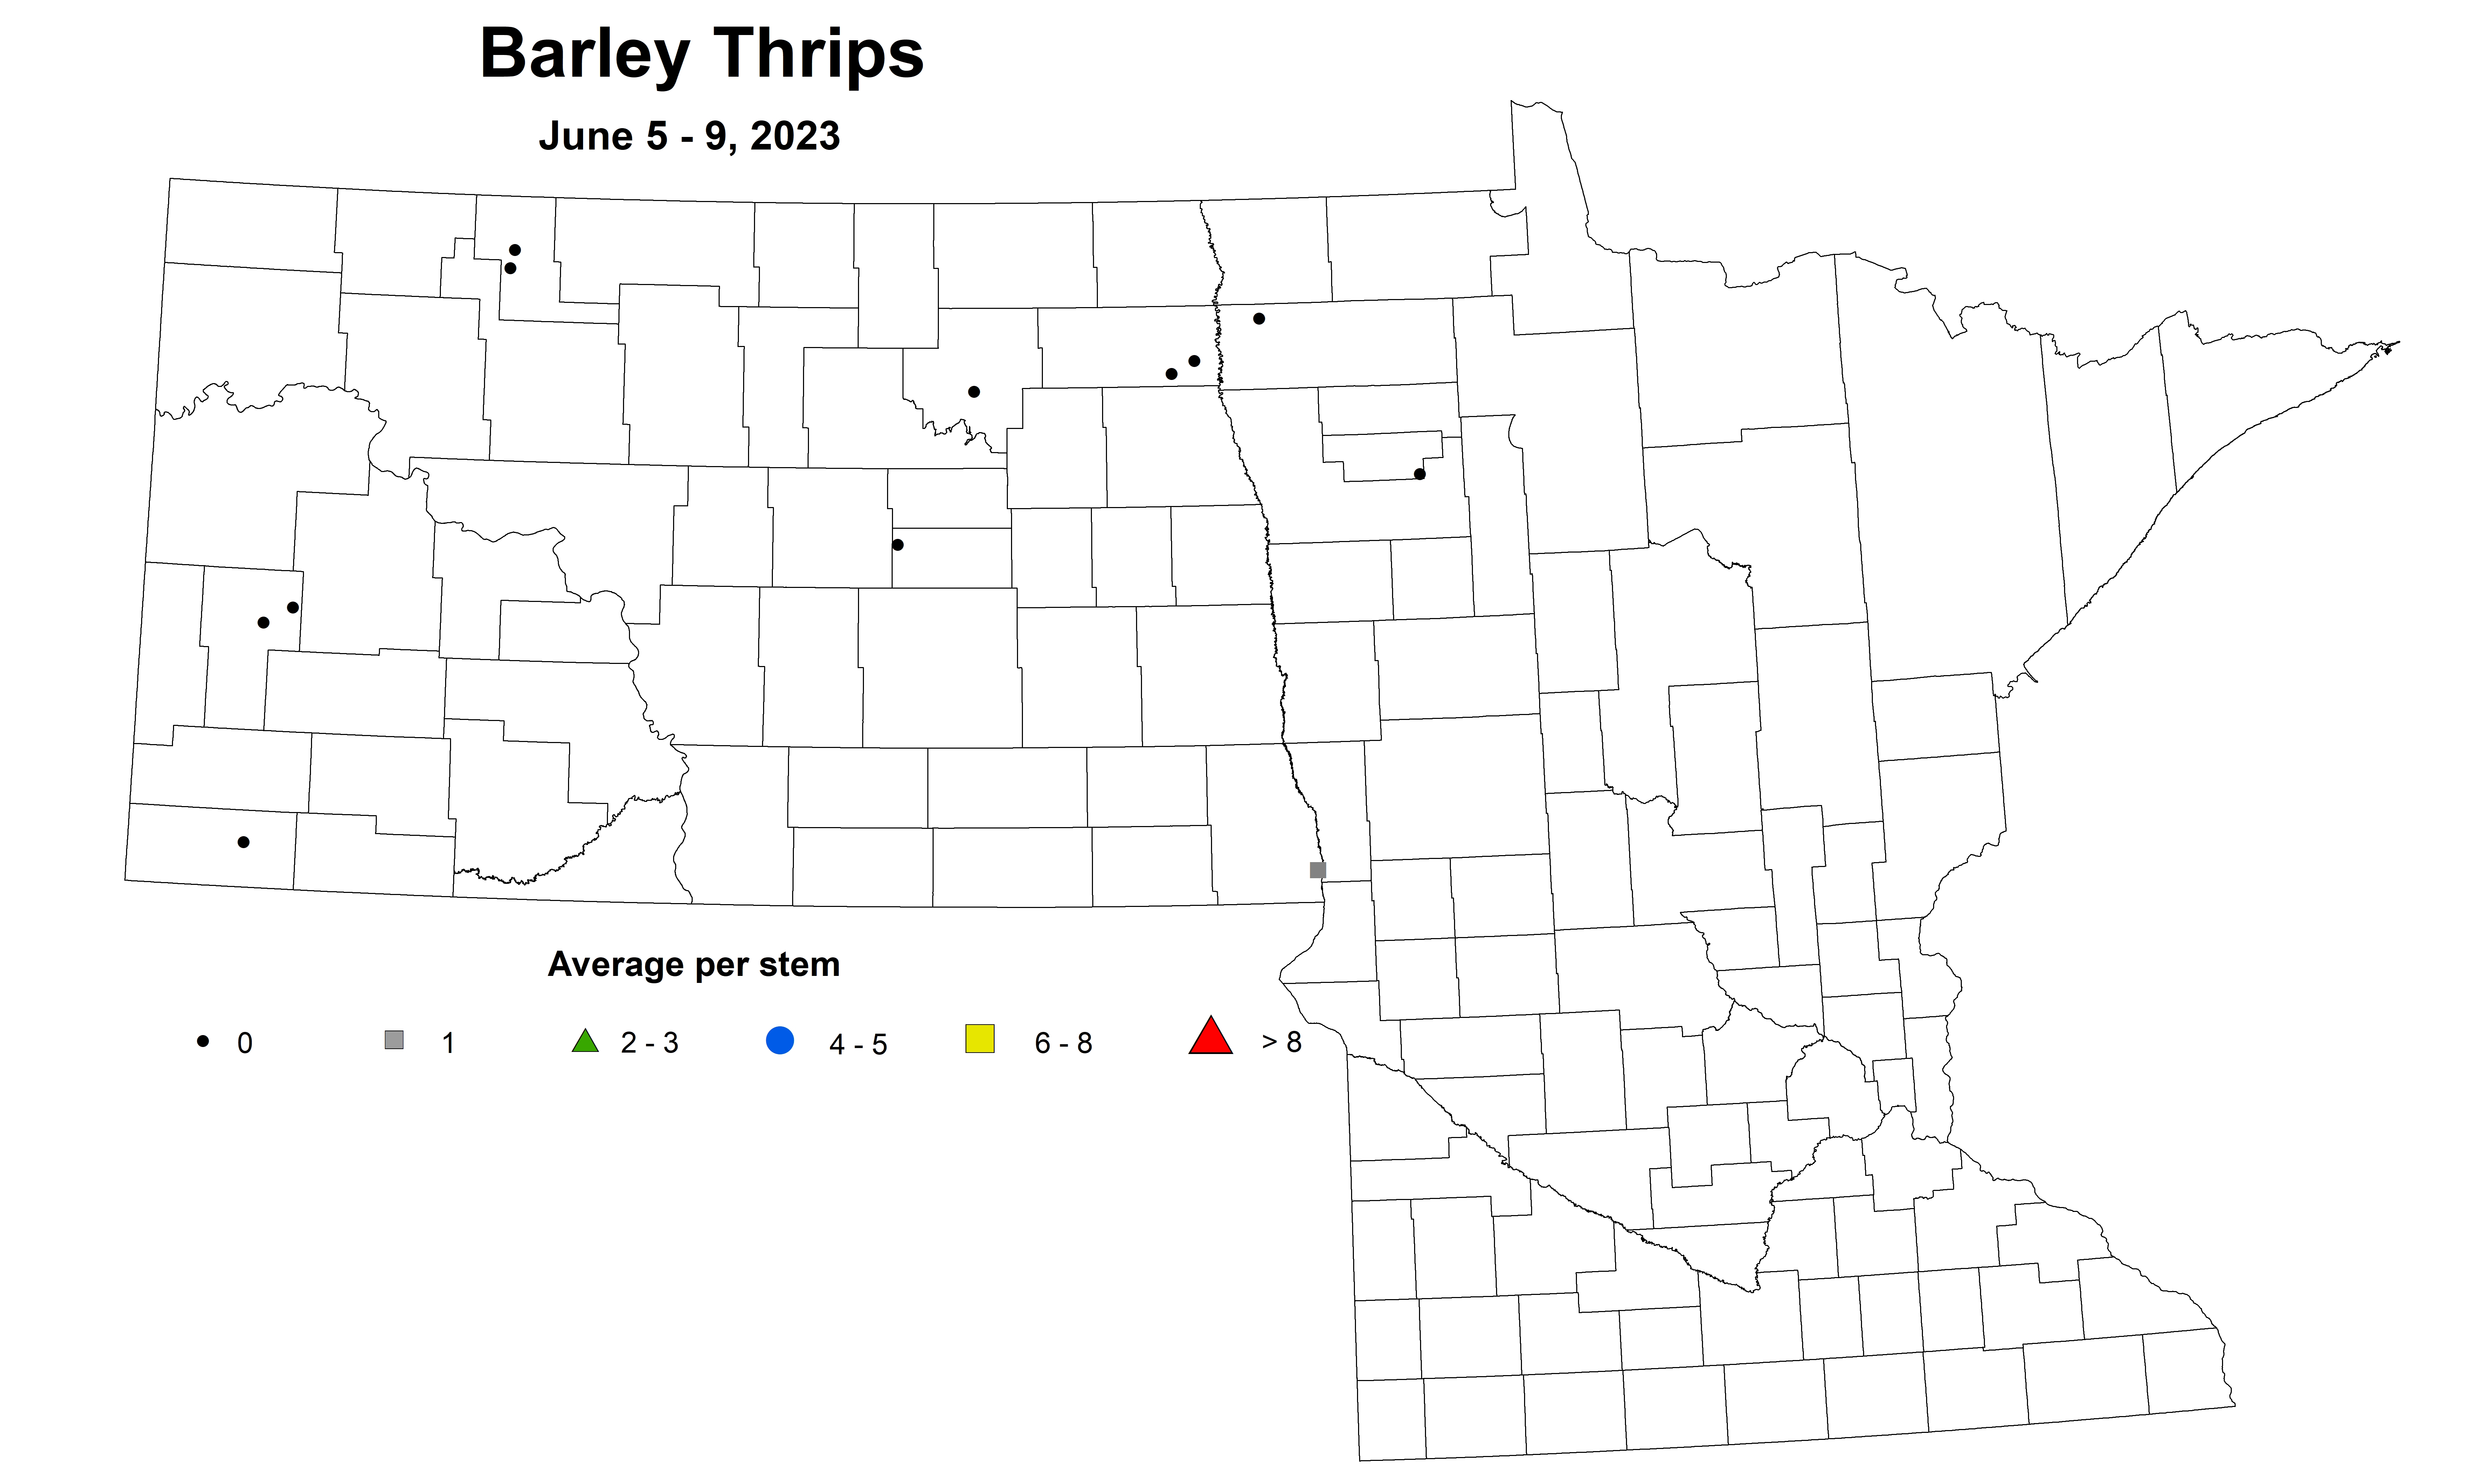 barley thrips June 5-9 2023